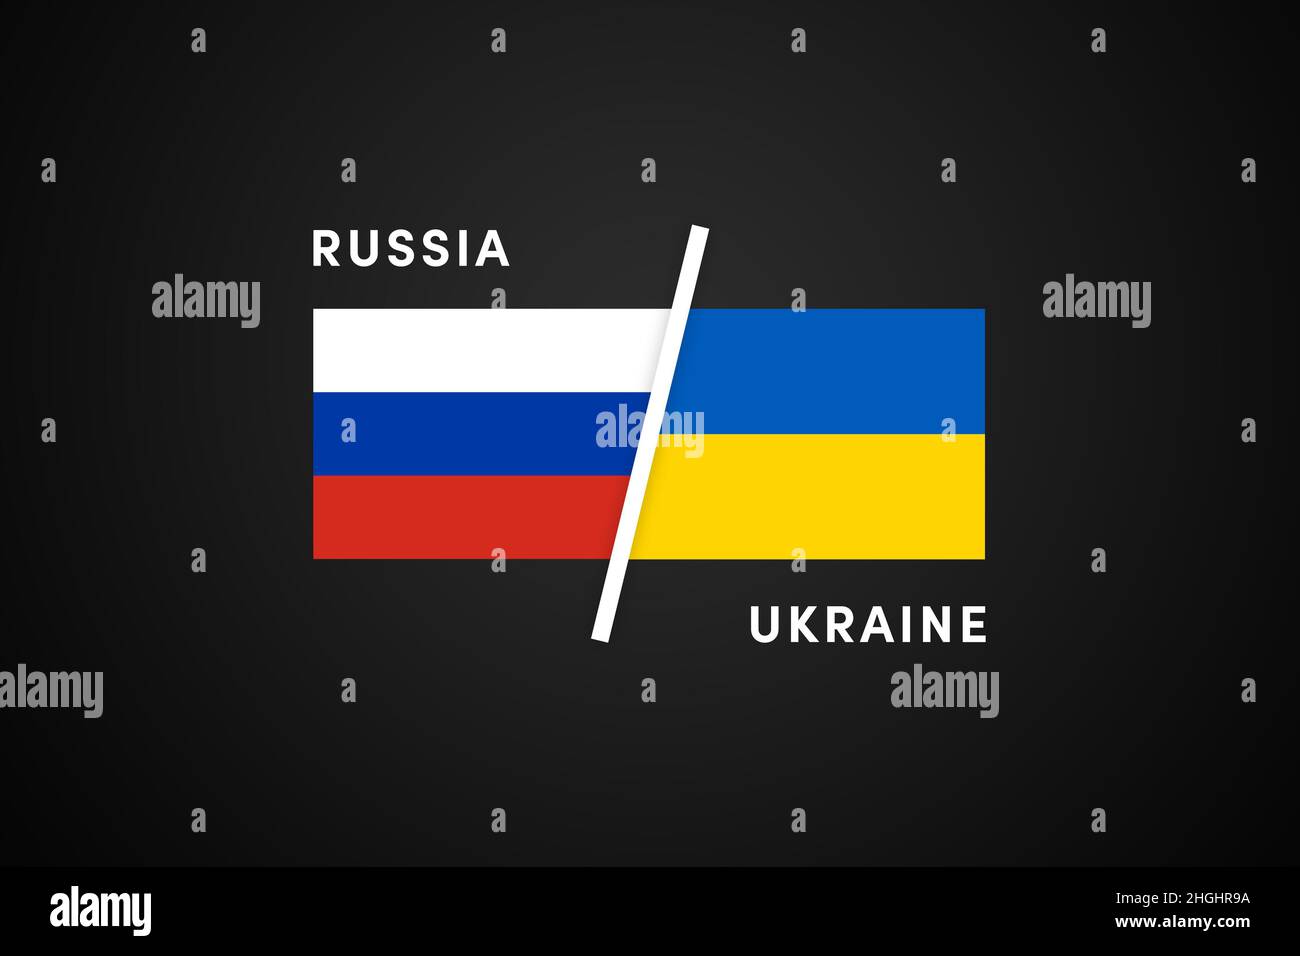 Conflict between Russia and Ukraine war concept. Russian and Ukrainian flag background. Stock Photo